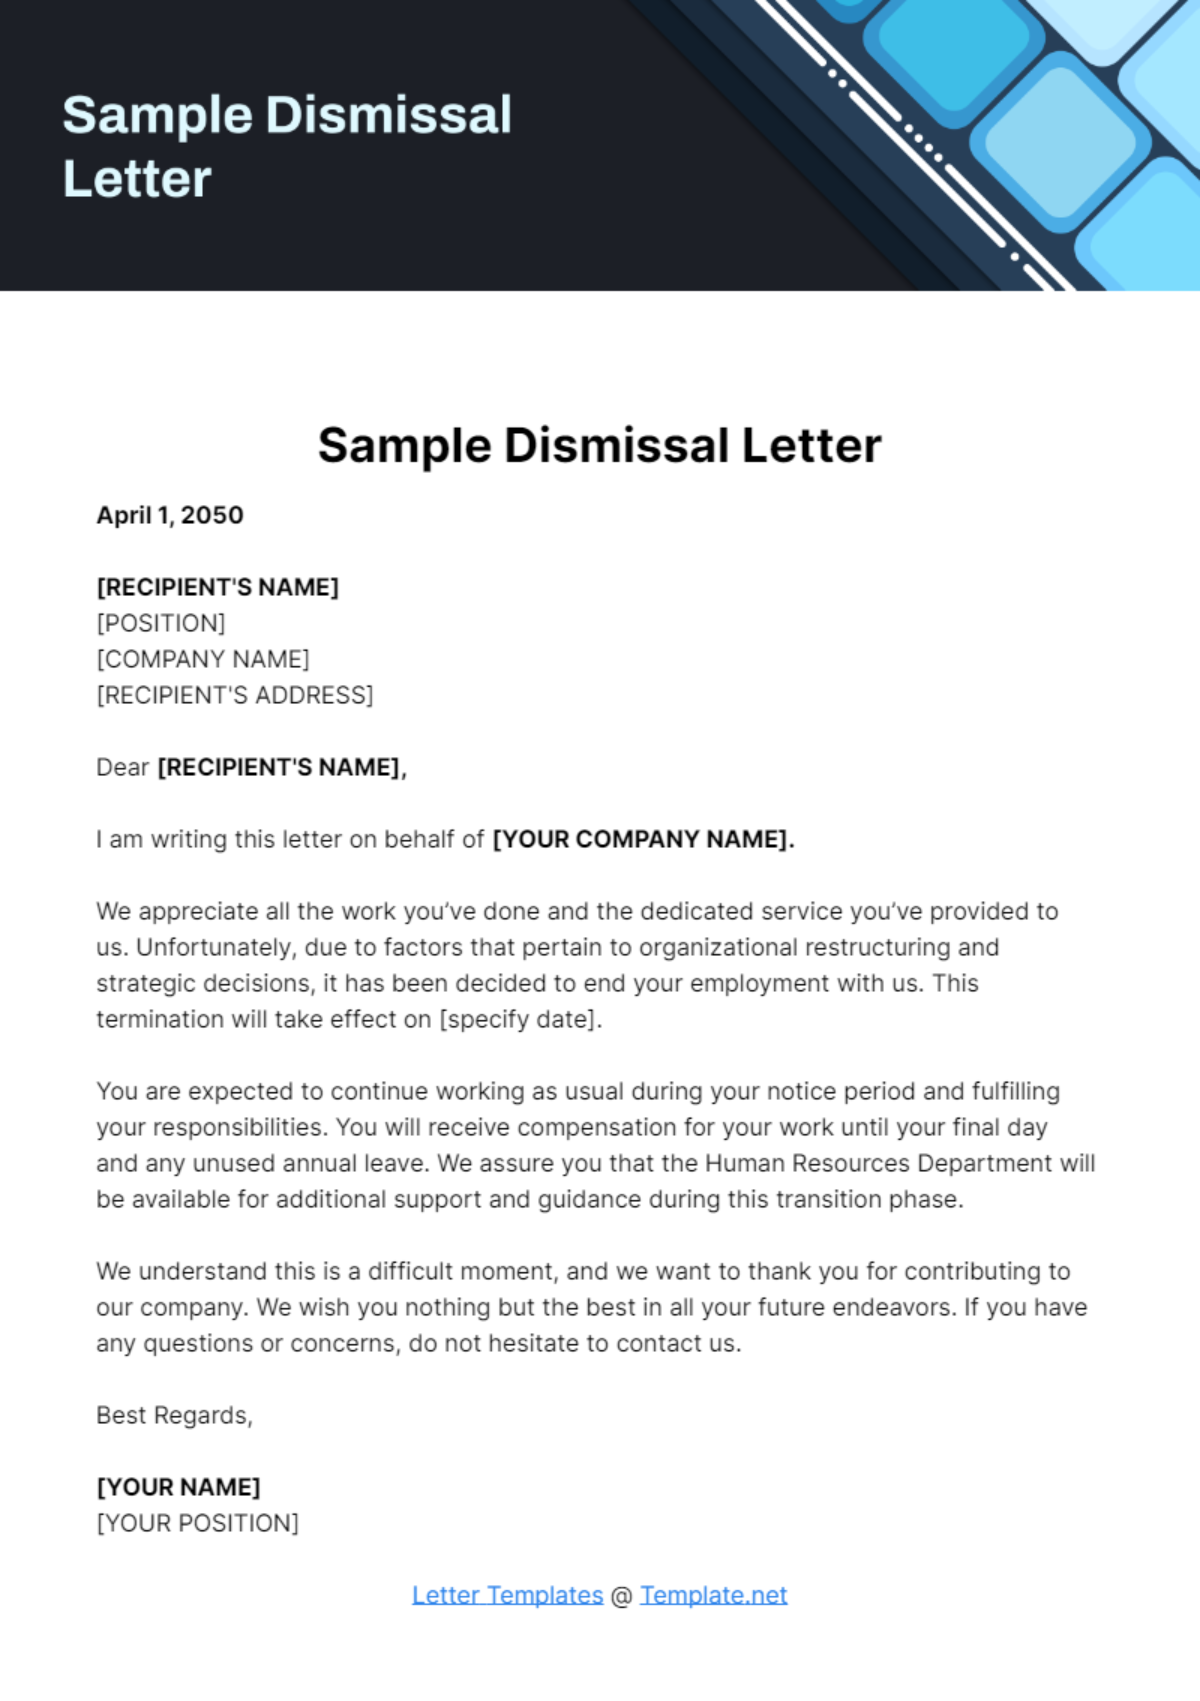 Free Sample Dismissal Letter Template